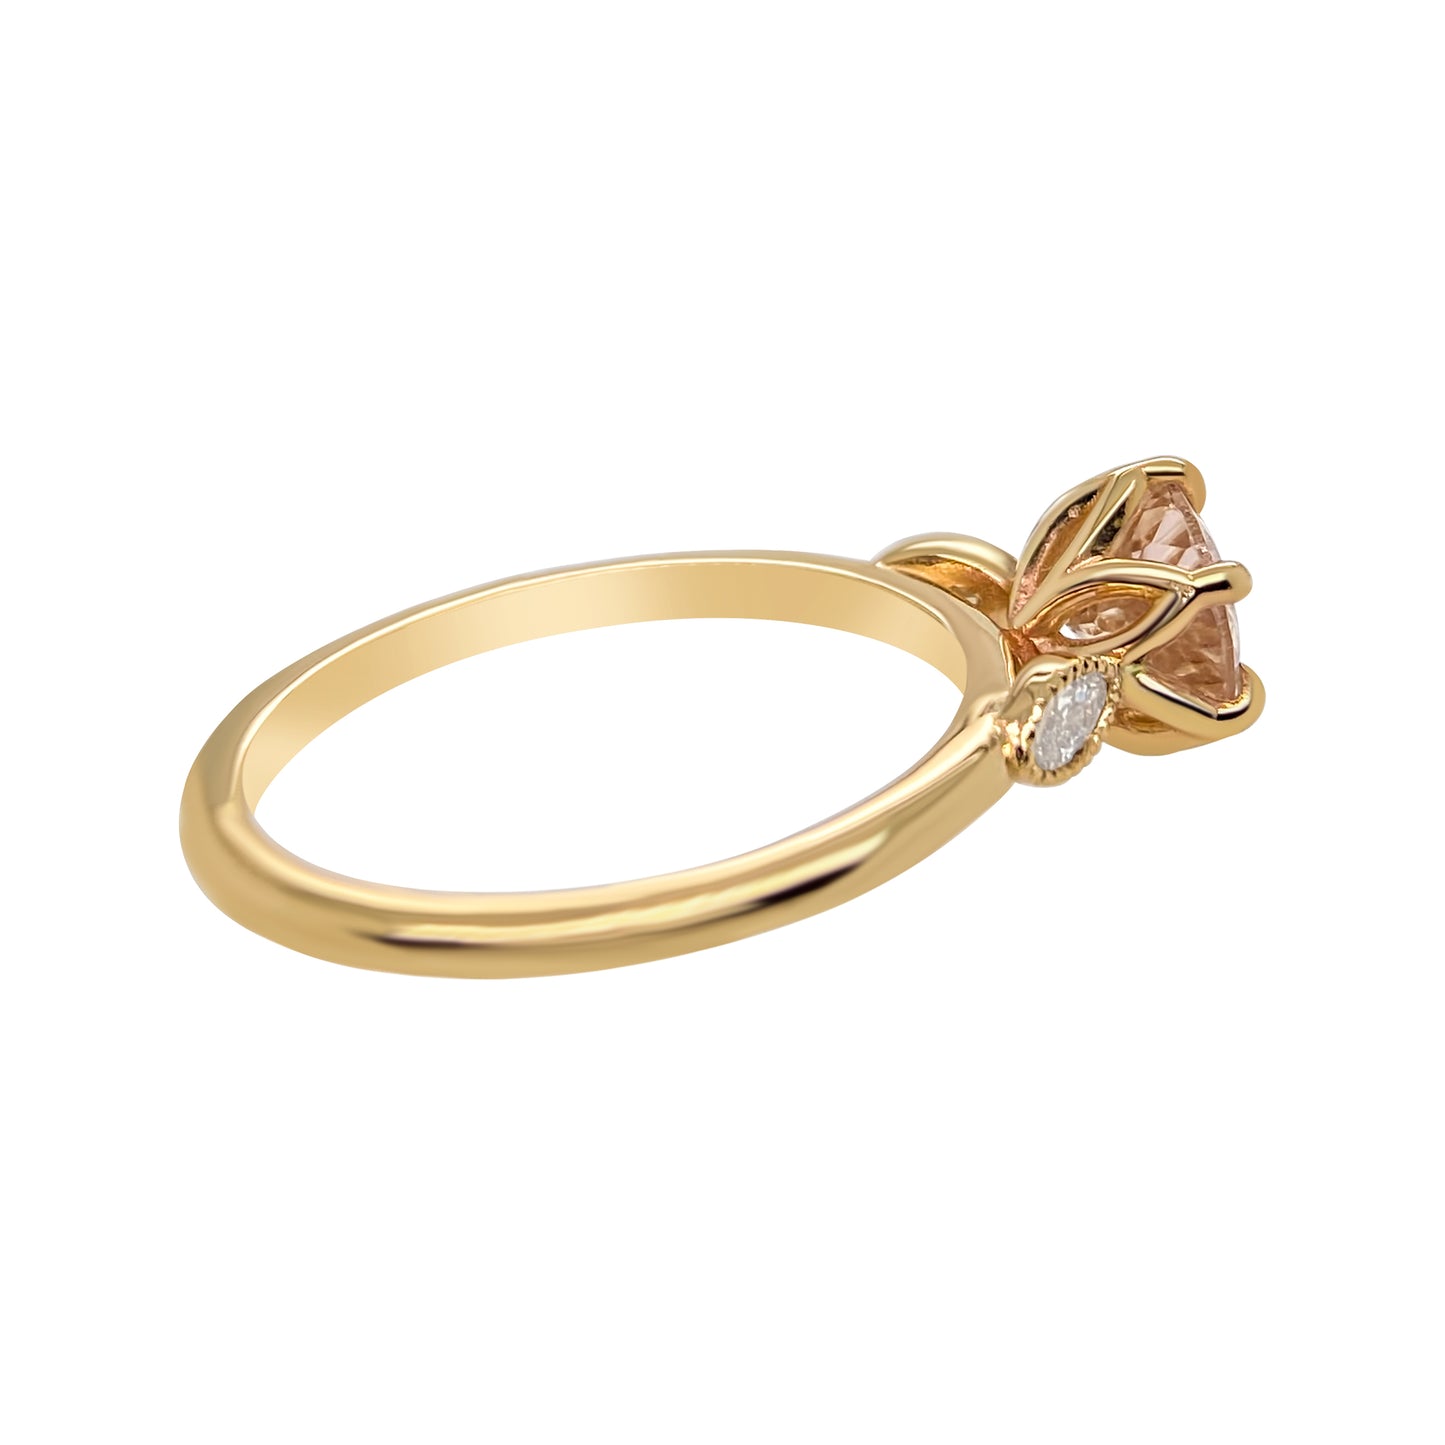 Romantic Morganite Tulip Engagement Ring Marquise Diamond Accents Vintage Style Miligrain 14K yellow gold